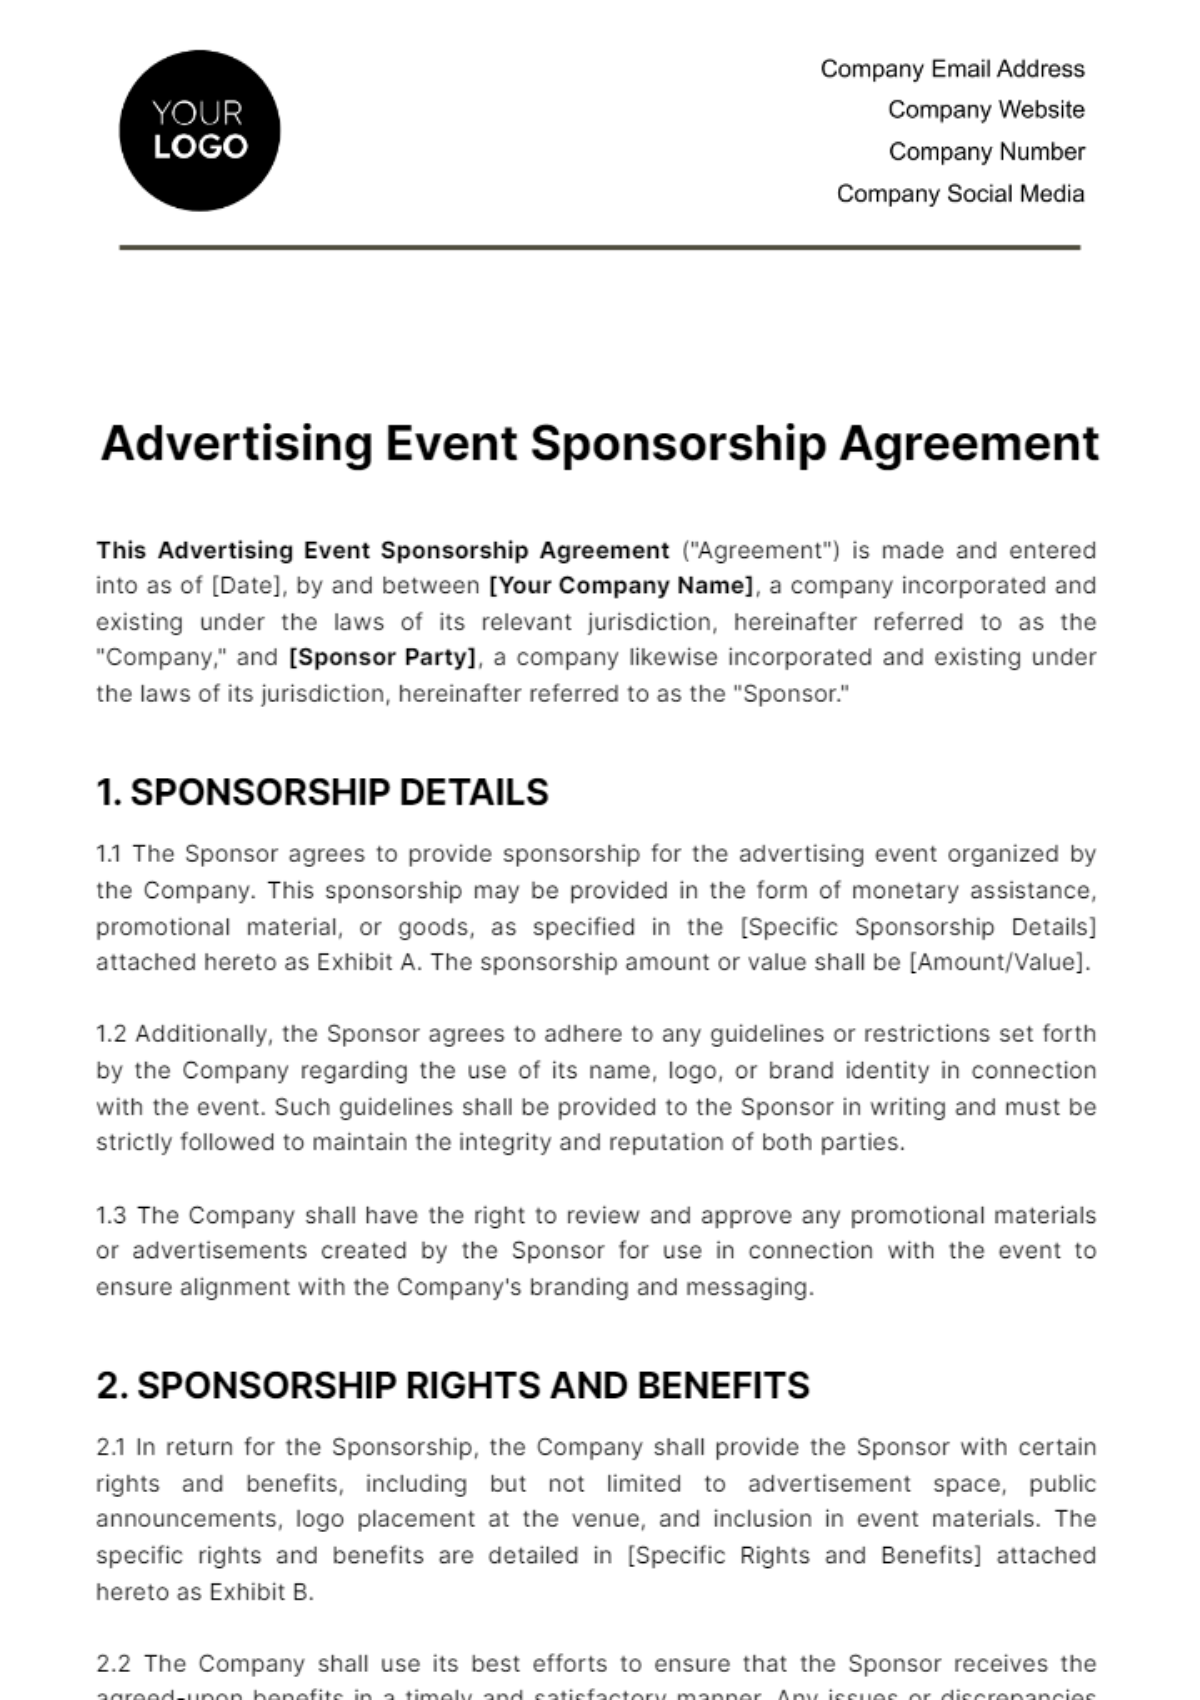 Free Advertising Event Sponsorship Agreement Template